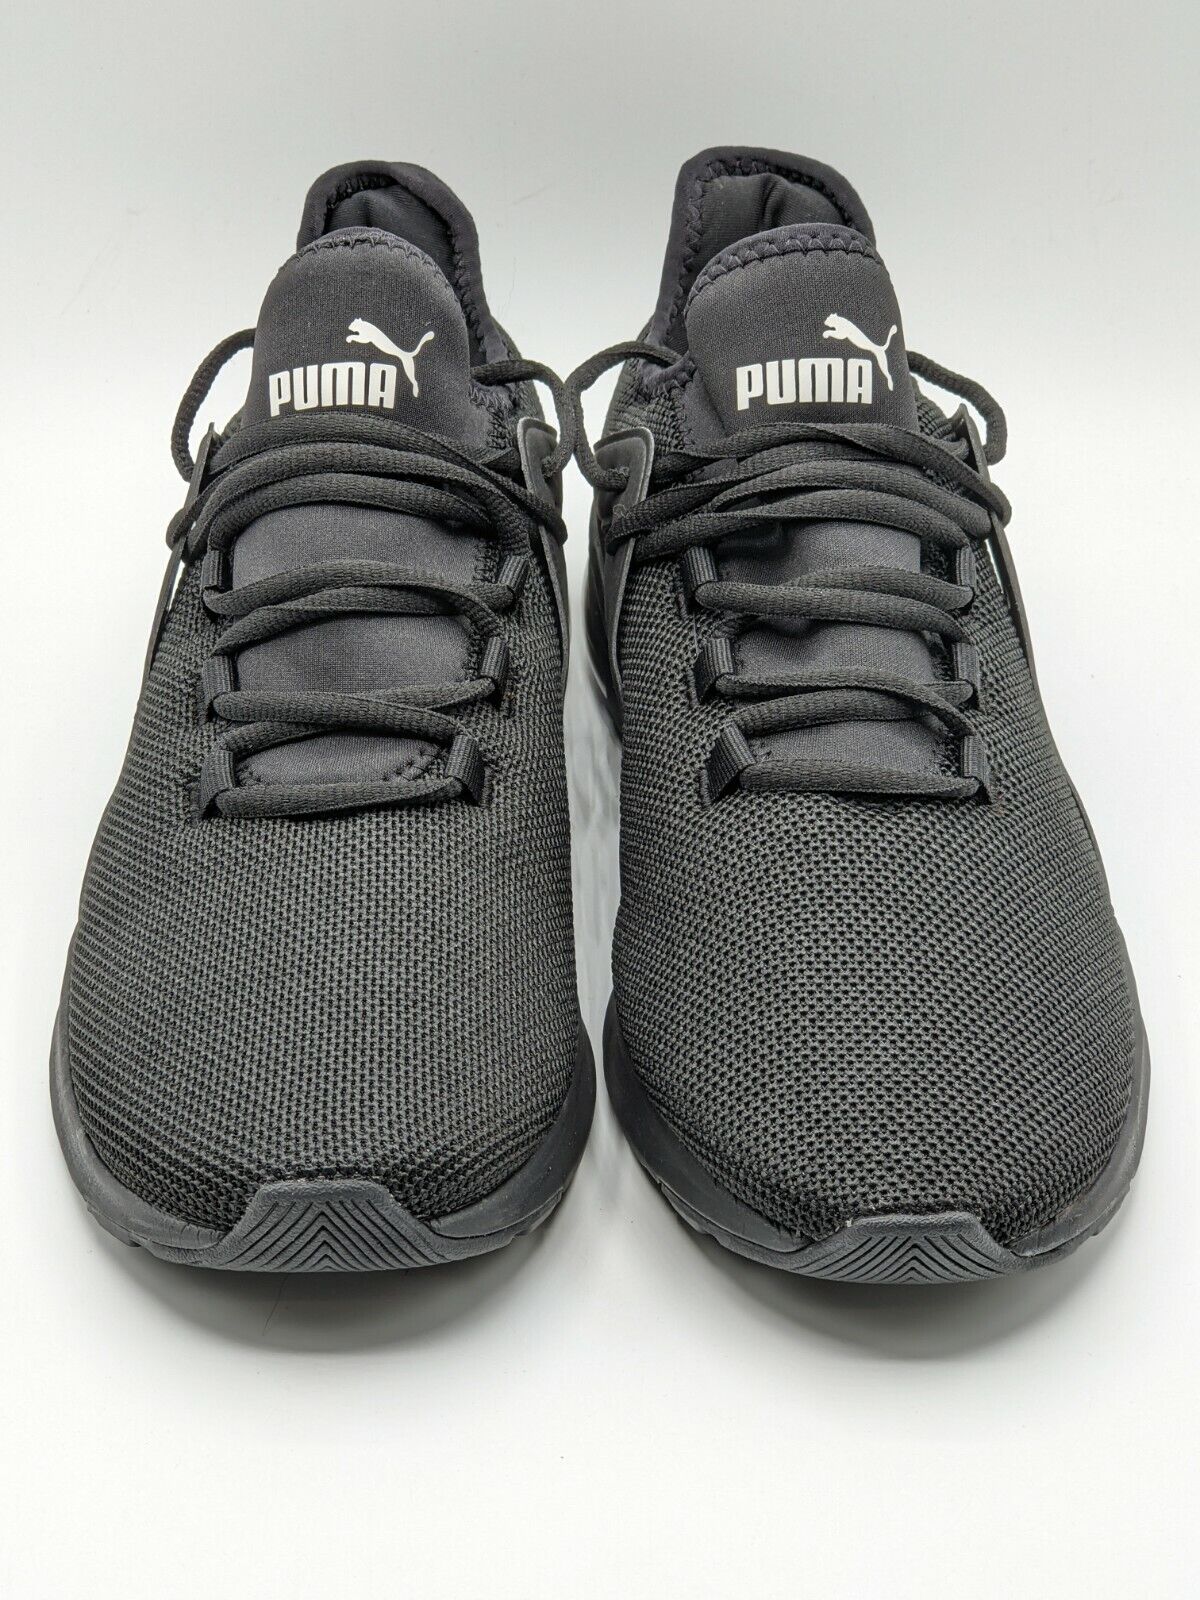 PUMA Mens Enzo Beta Woven Running Shoes